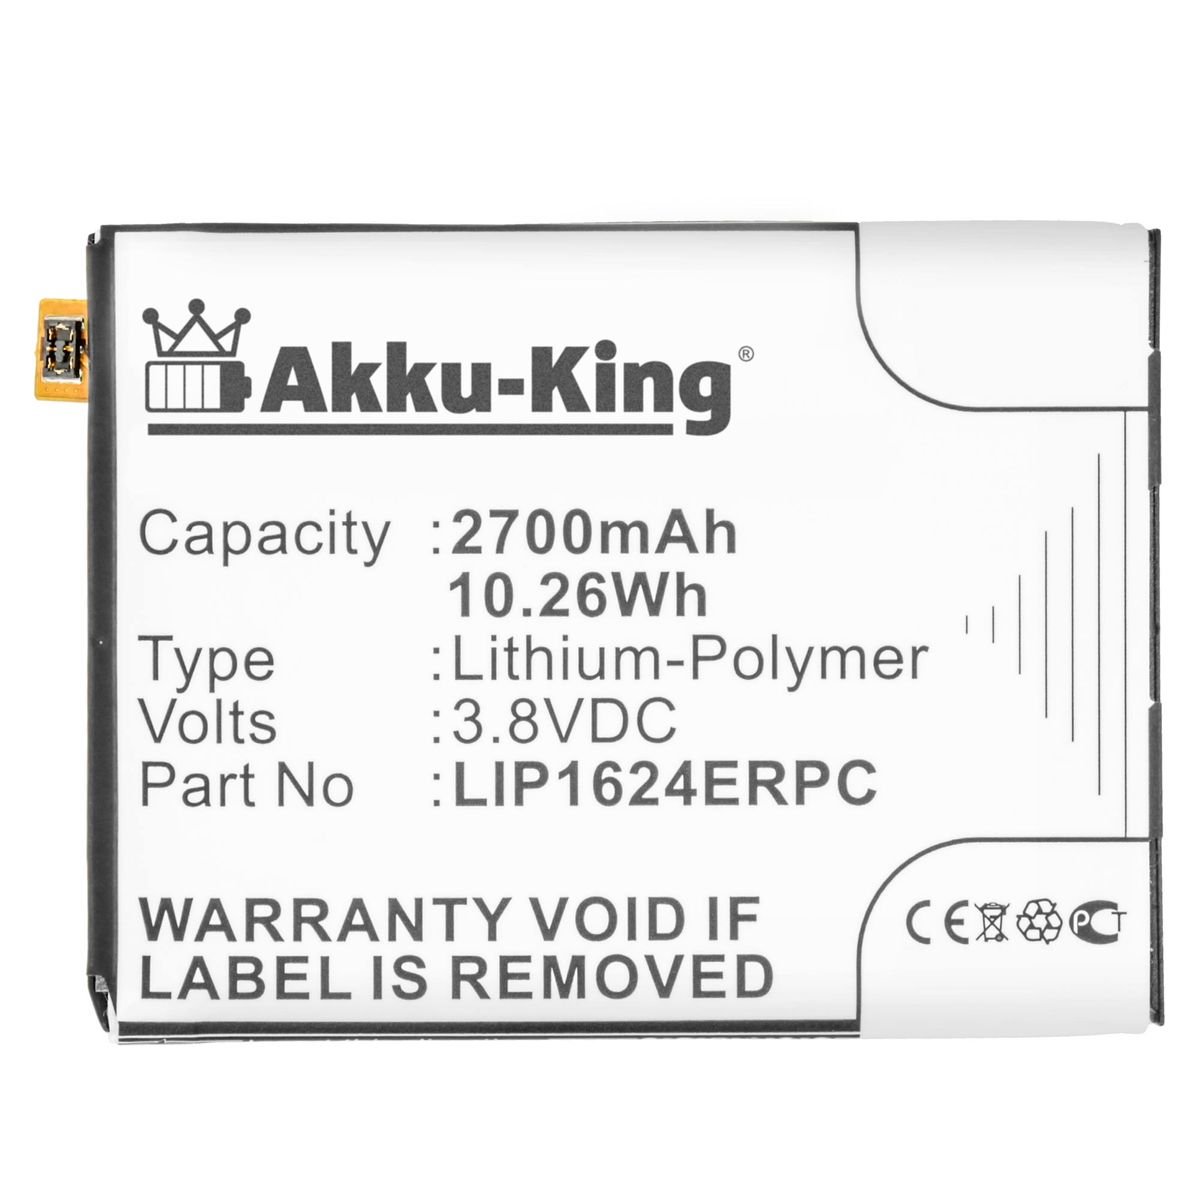 AKKU-KING Akku 3.8 LIP1624ERPC Sony kompatibel Handy-Akku, 2700mAh Volt, Li-Polymer mit